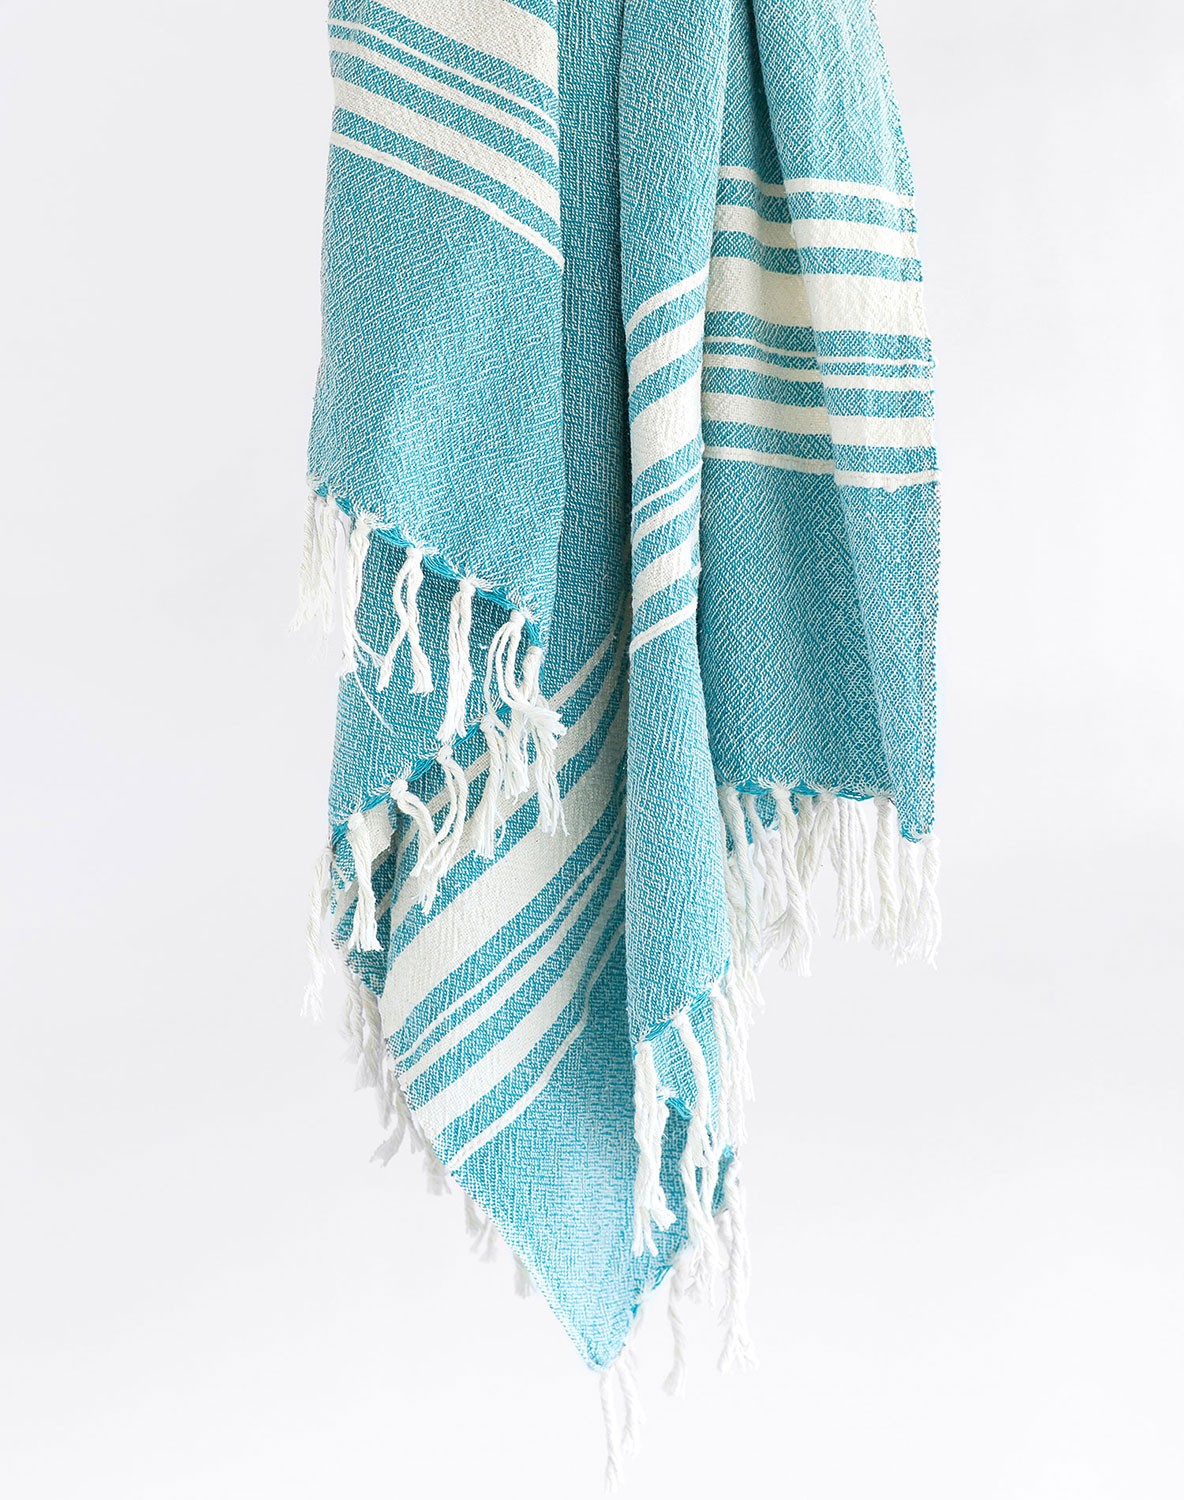 Towels_BathTowel_BeachTowel_Contemporary_Handwoven_Striped_Turquoise